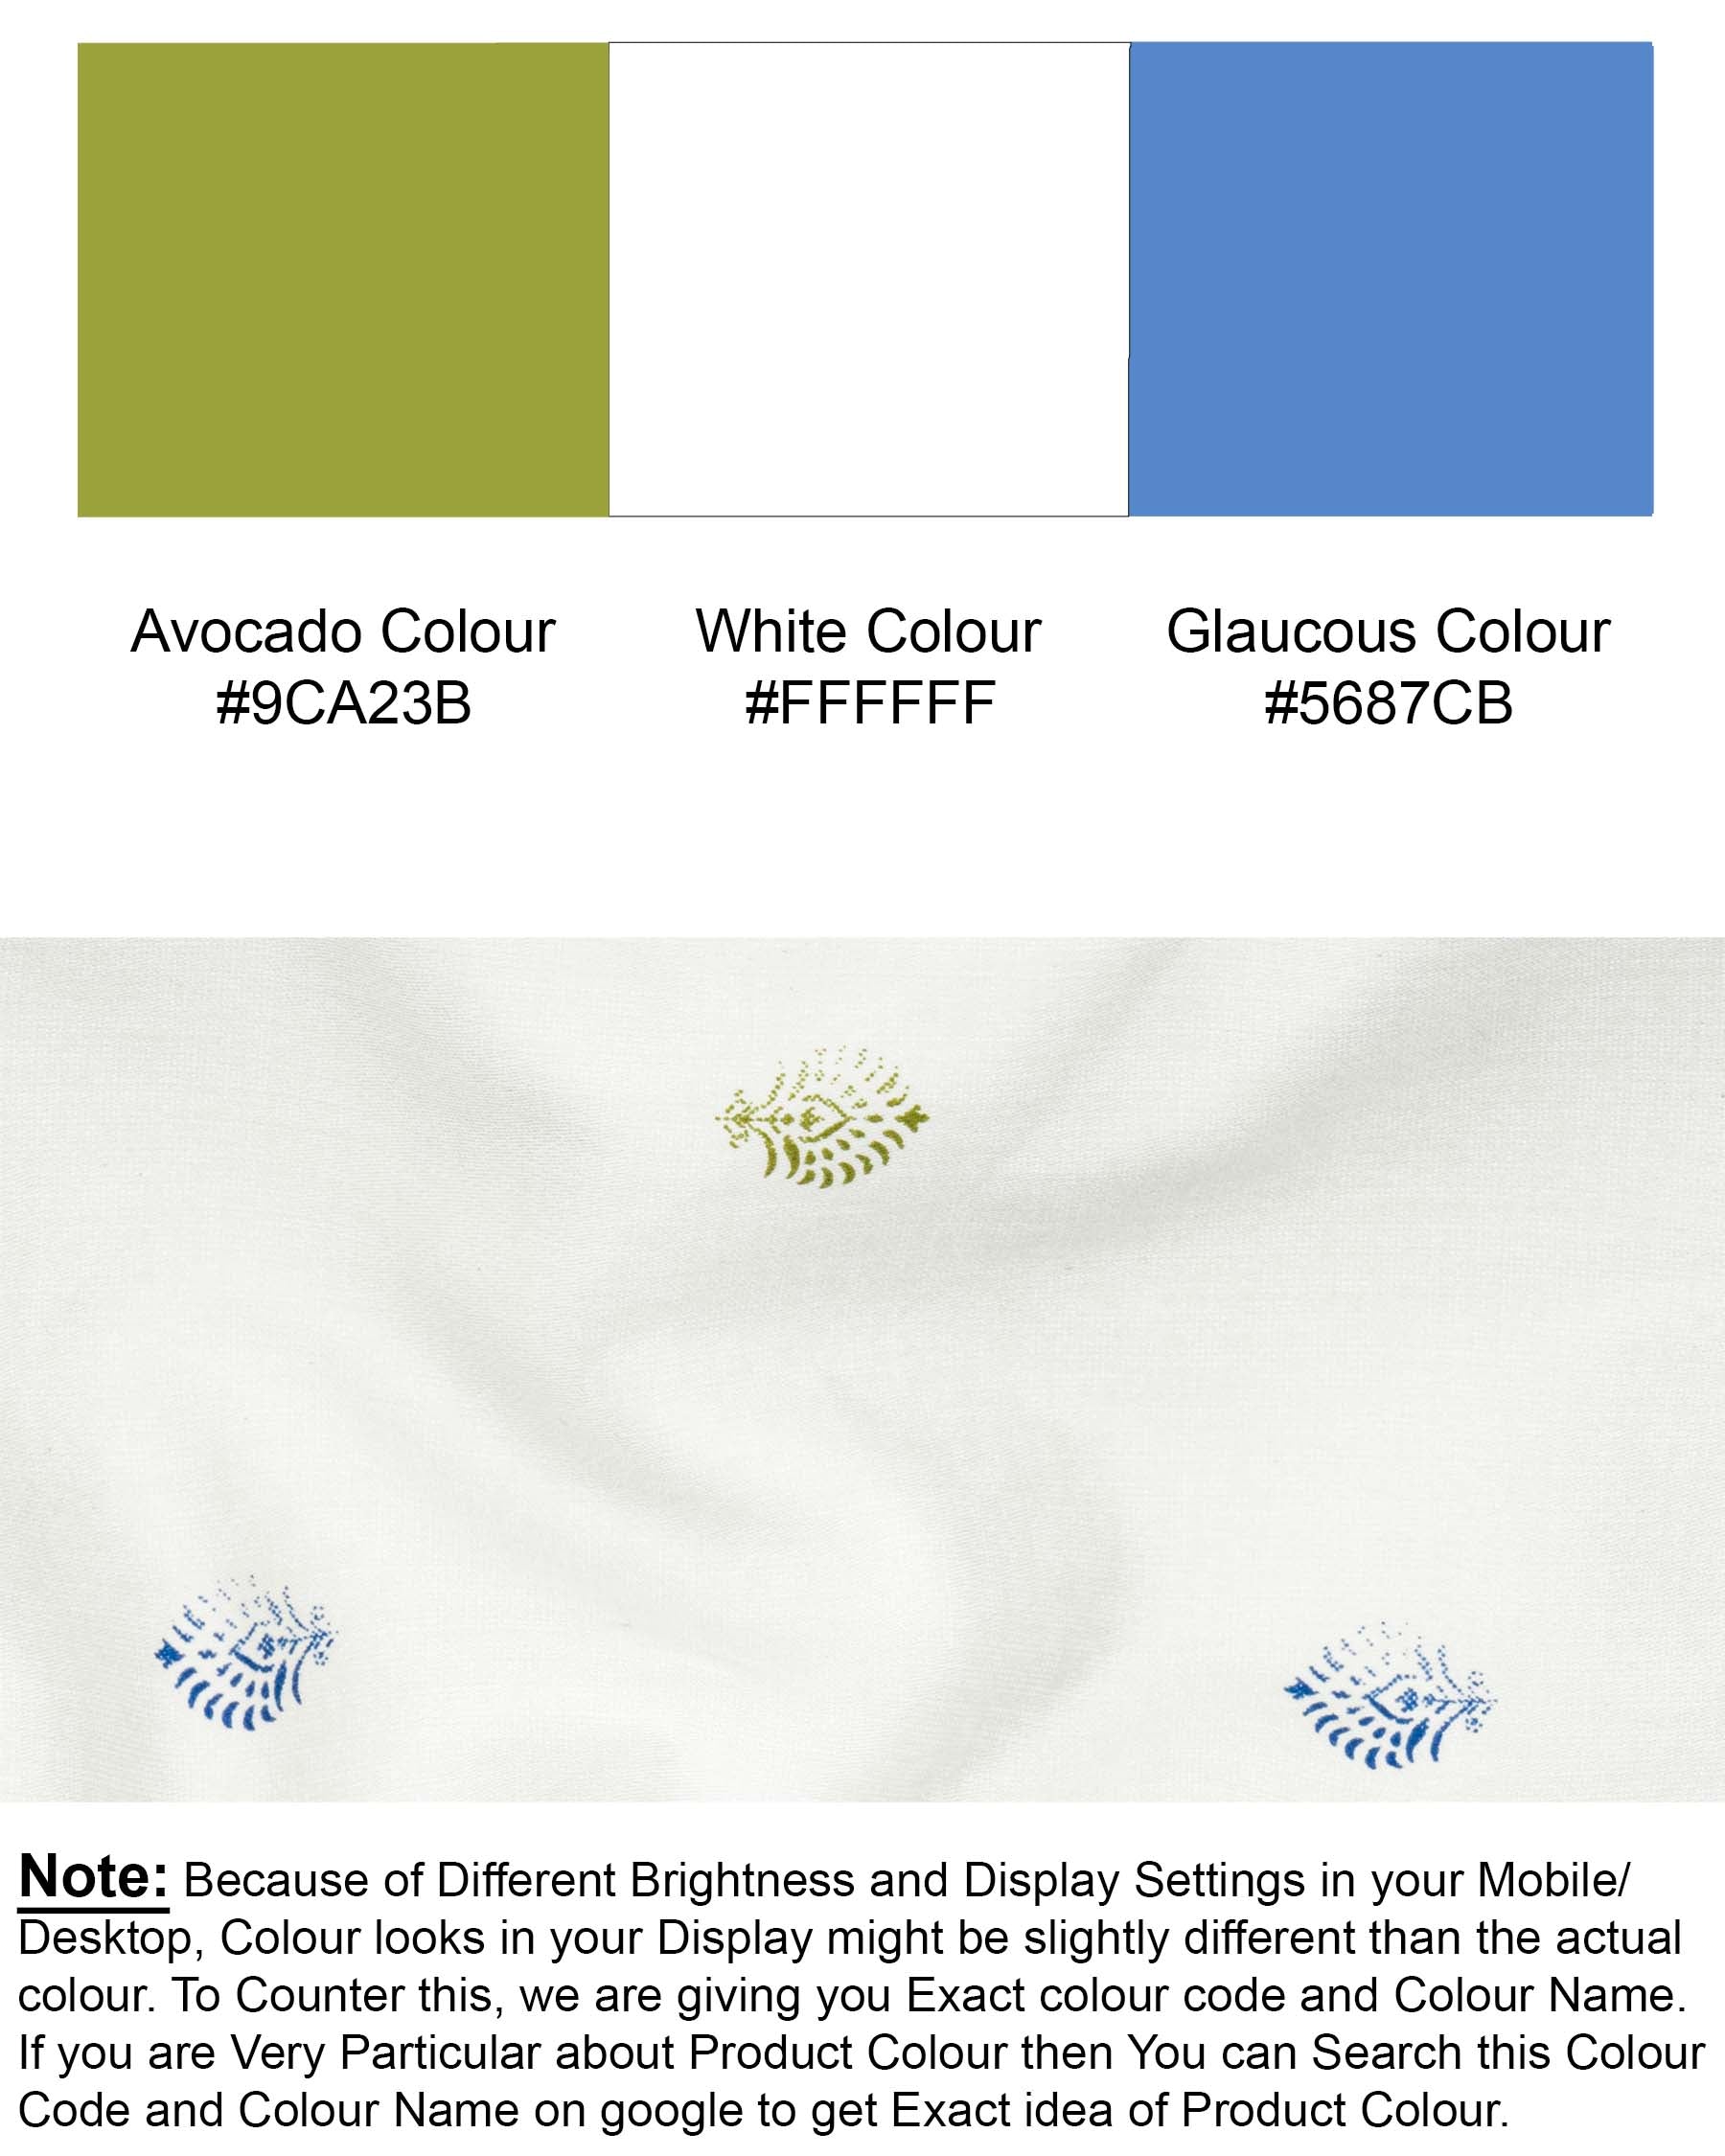 Bright White and Avocado Green Small Motifs Textured Super Soft Premium Cotton Shirt 7142-38,7142-H-38,7142-39,7142-H-39,7142-40,7142-H-40,7142-42,7142-H-42,7142-44,7142-H-44,7142-46,7142-H-46,7142-48,7142-H-48,7142-50,7142-H-50,7142-52,7142-H-52